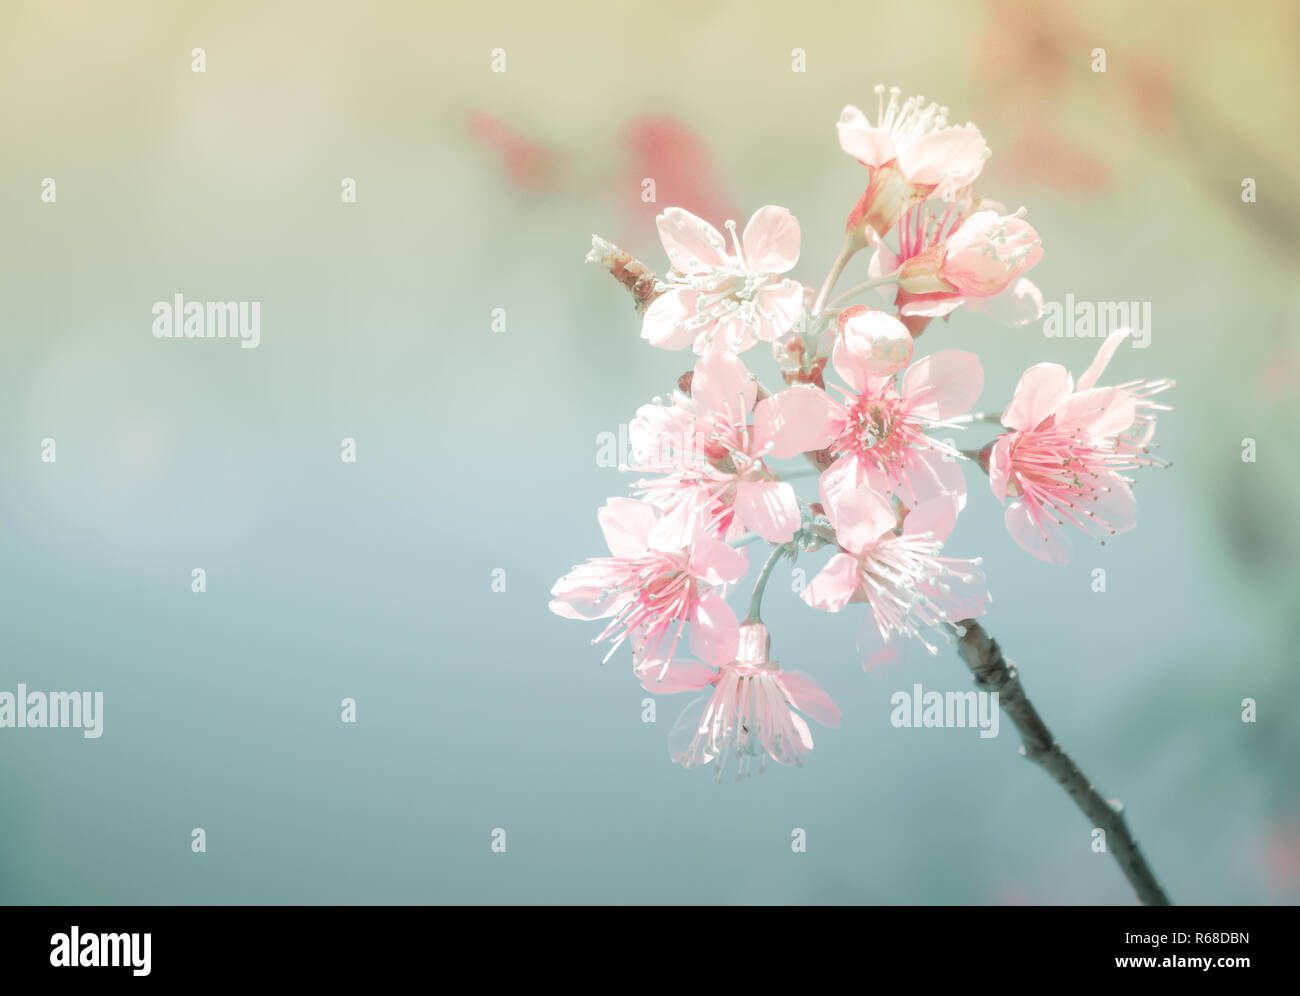 Soft focus Cherry Blossom or Sakura flower on nature background Stock Photo